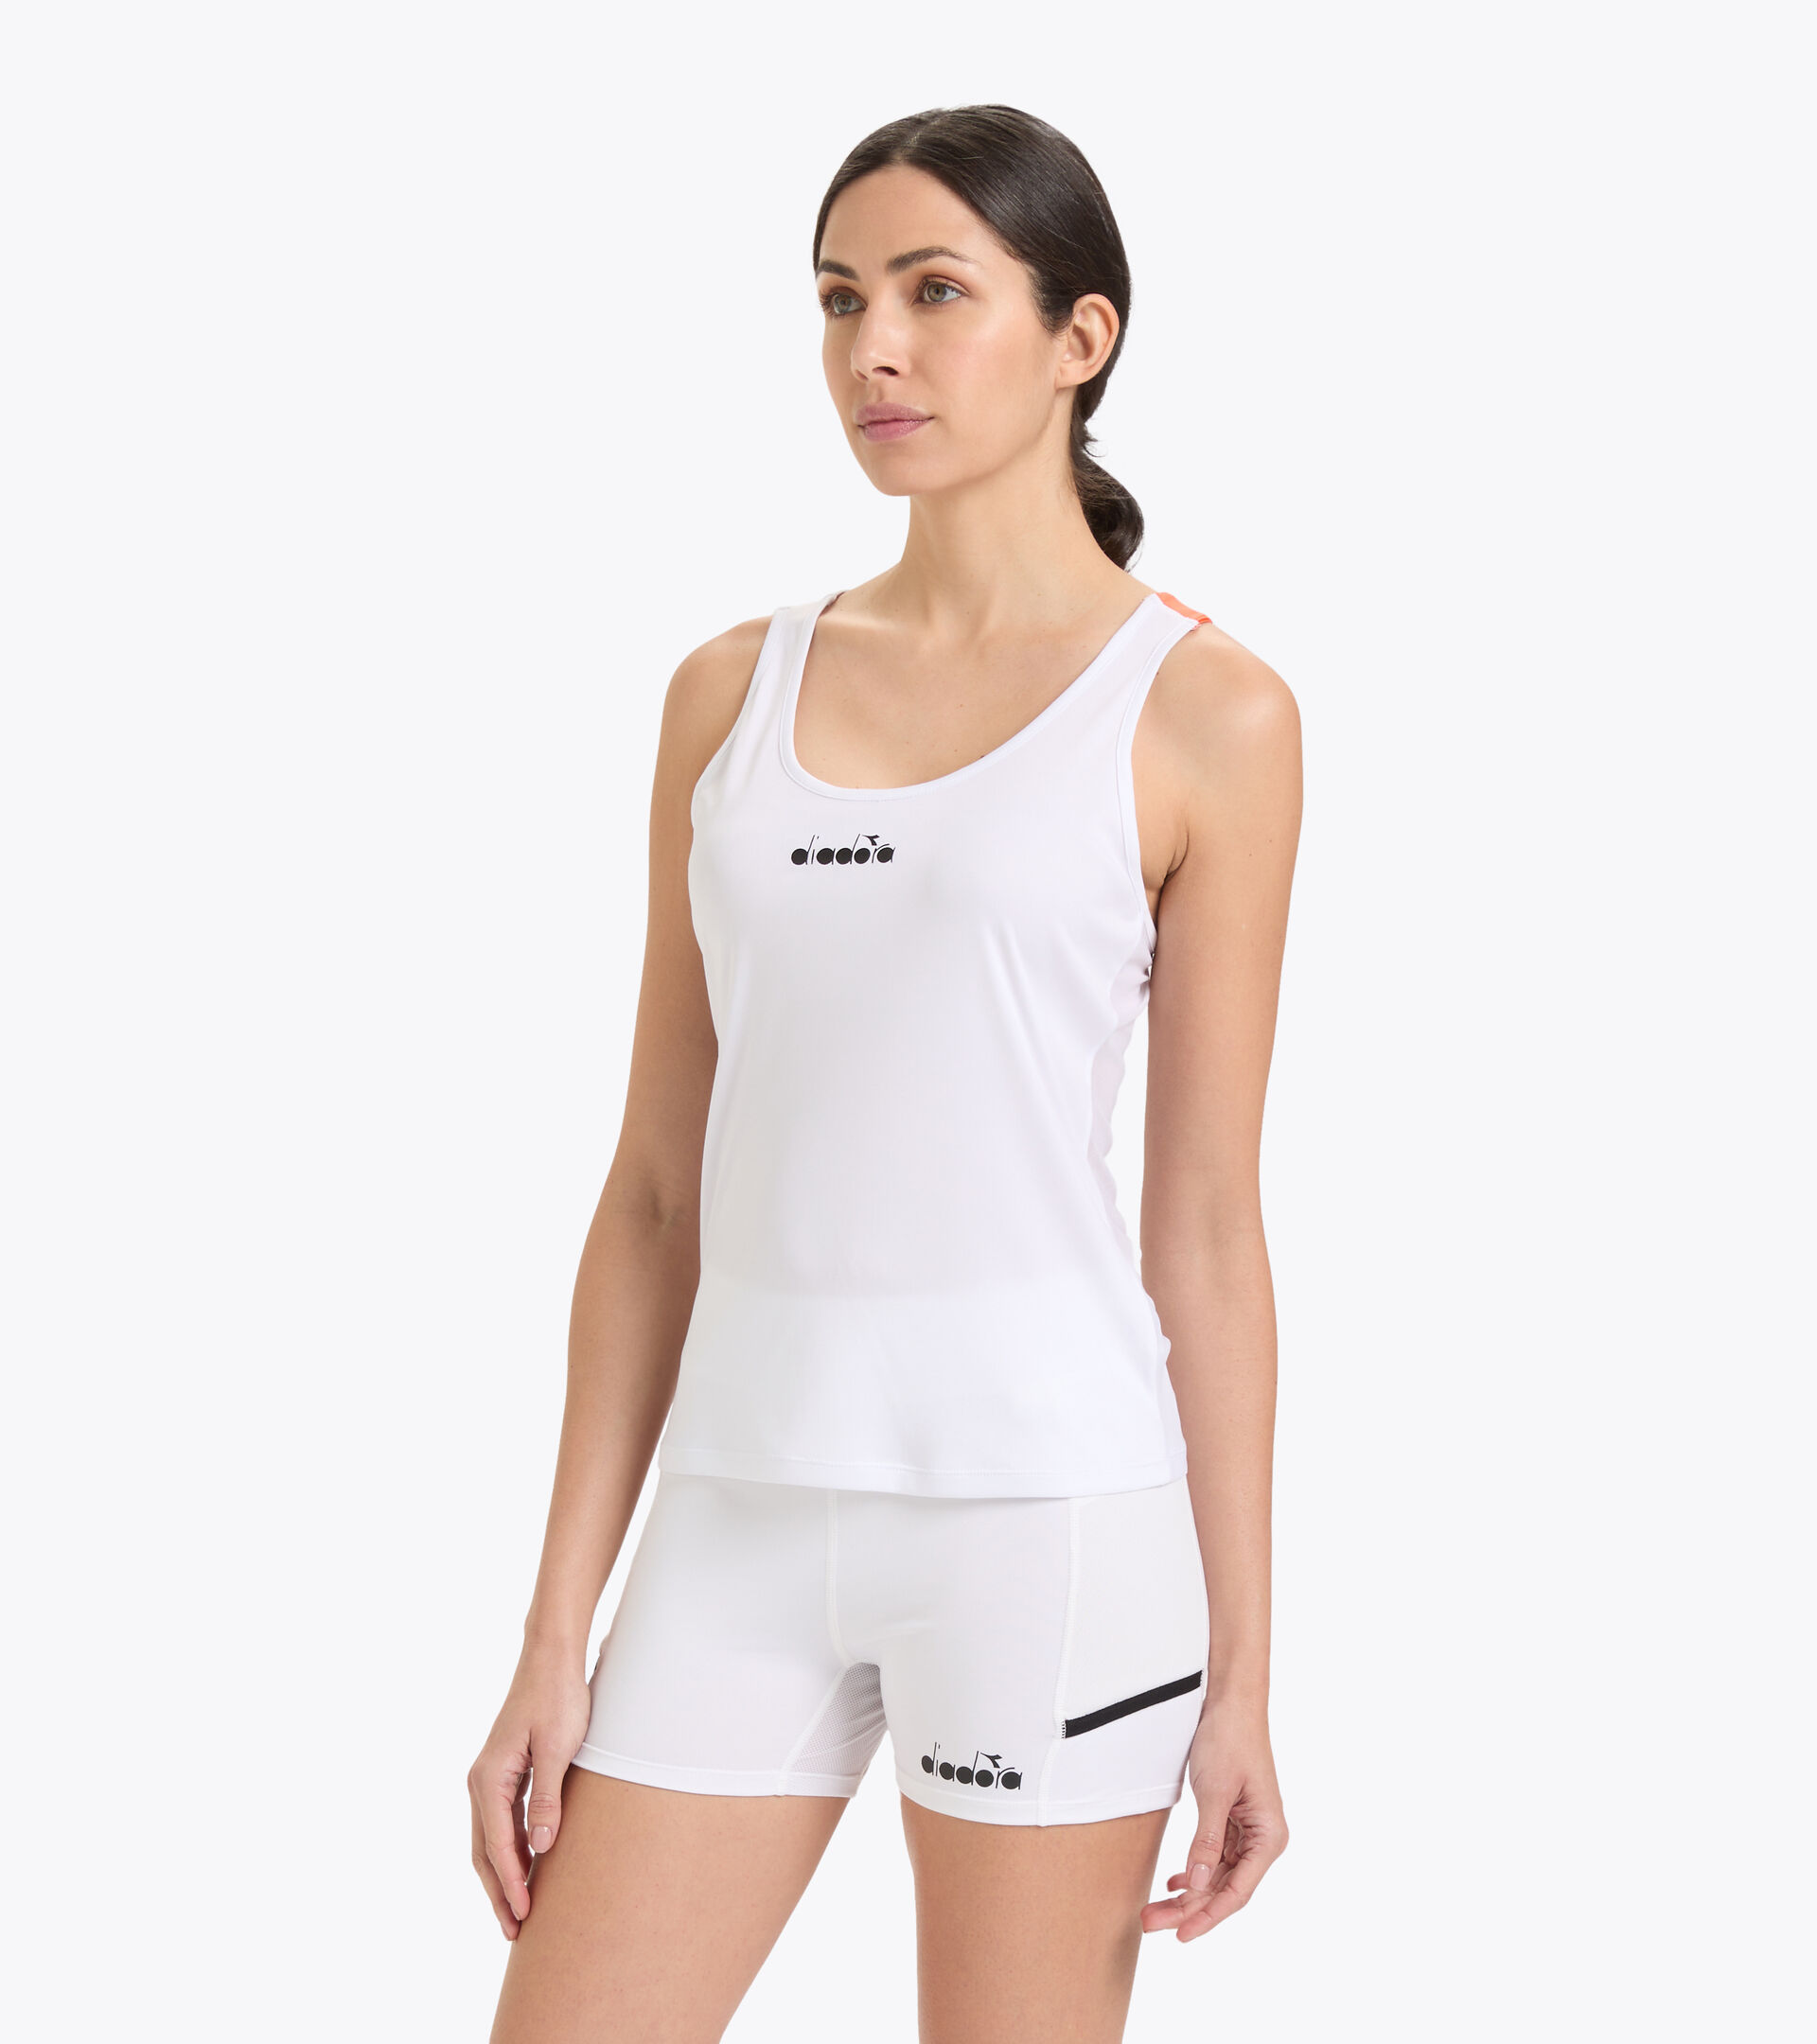 Tennis vest top - Women L. TANK OPTICAL WHITE - Diadora